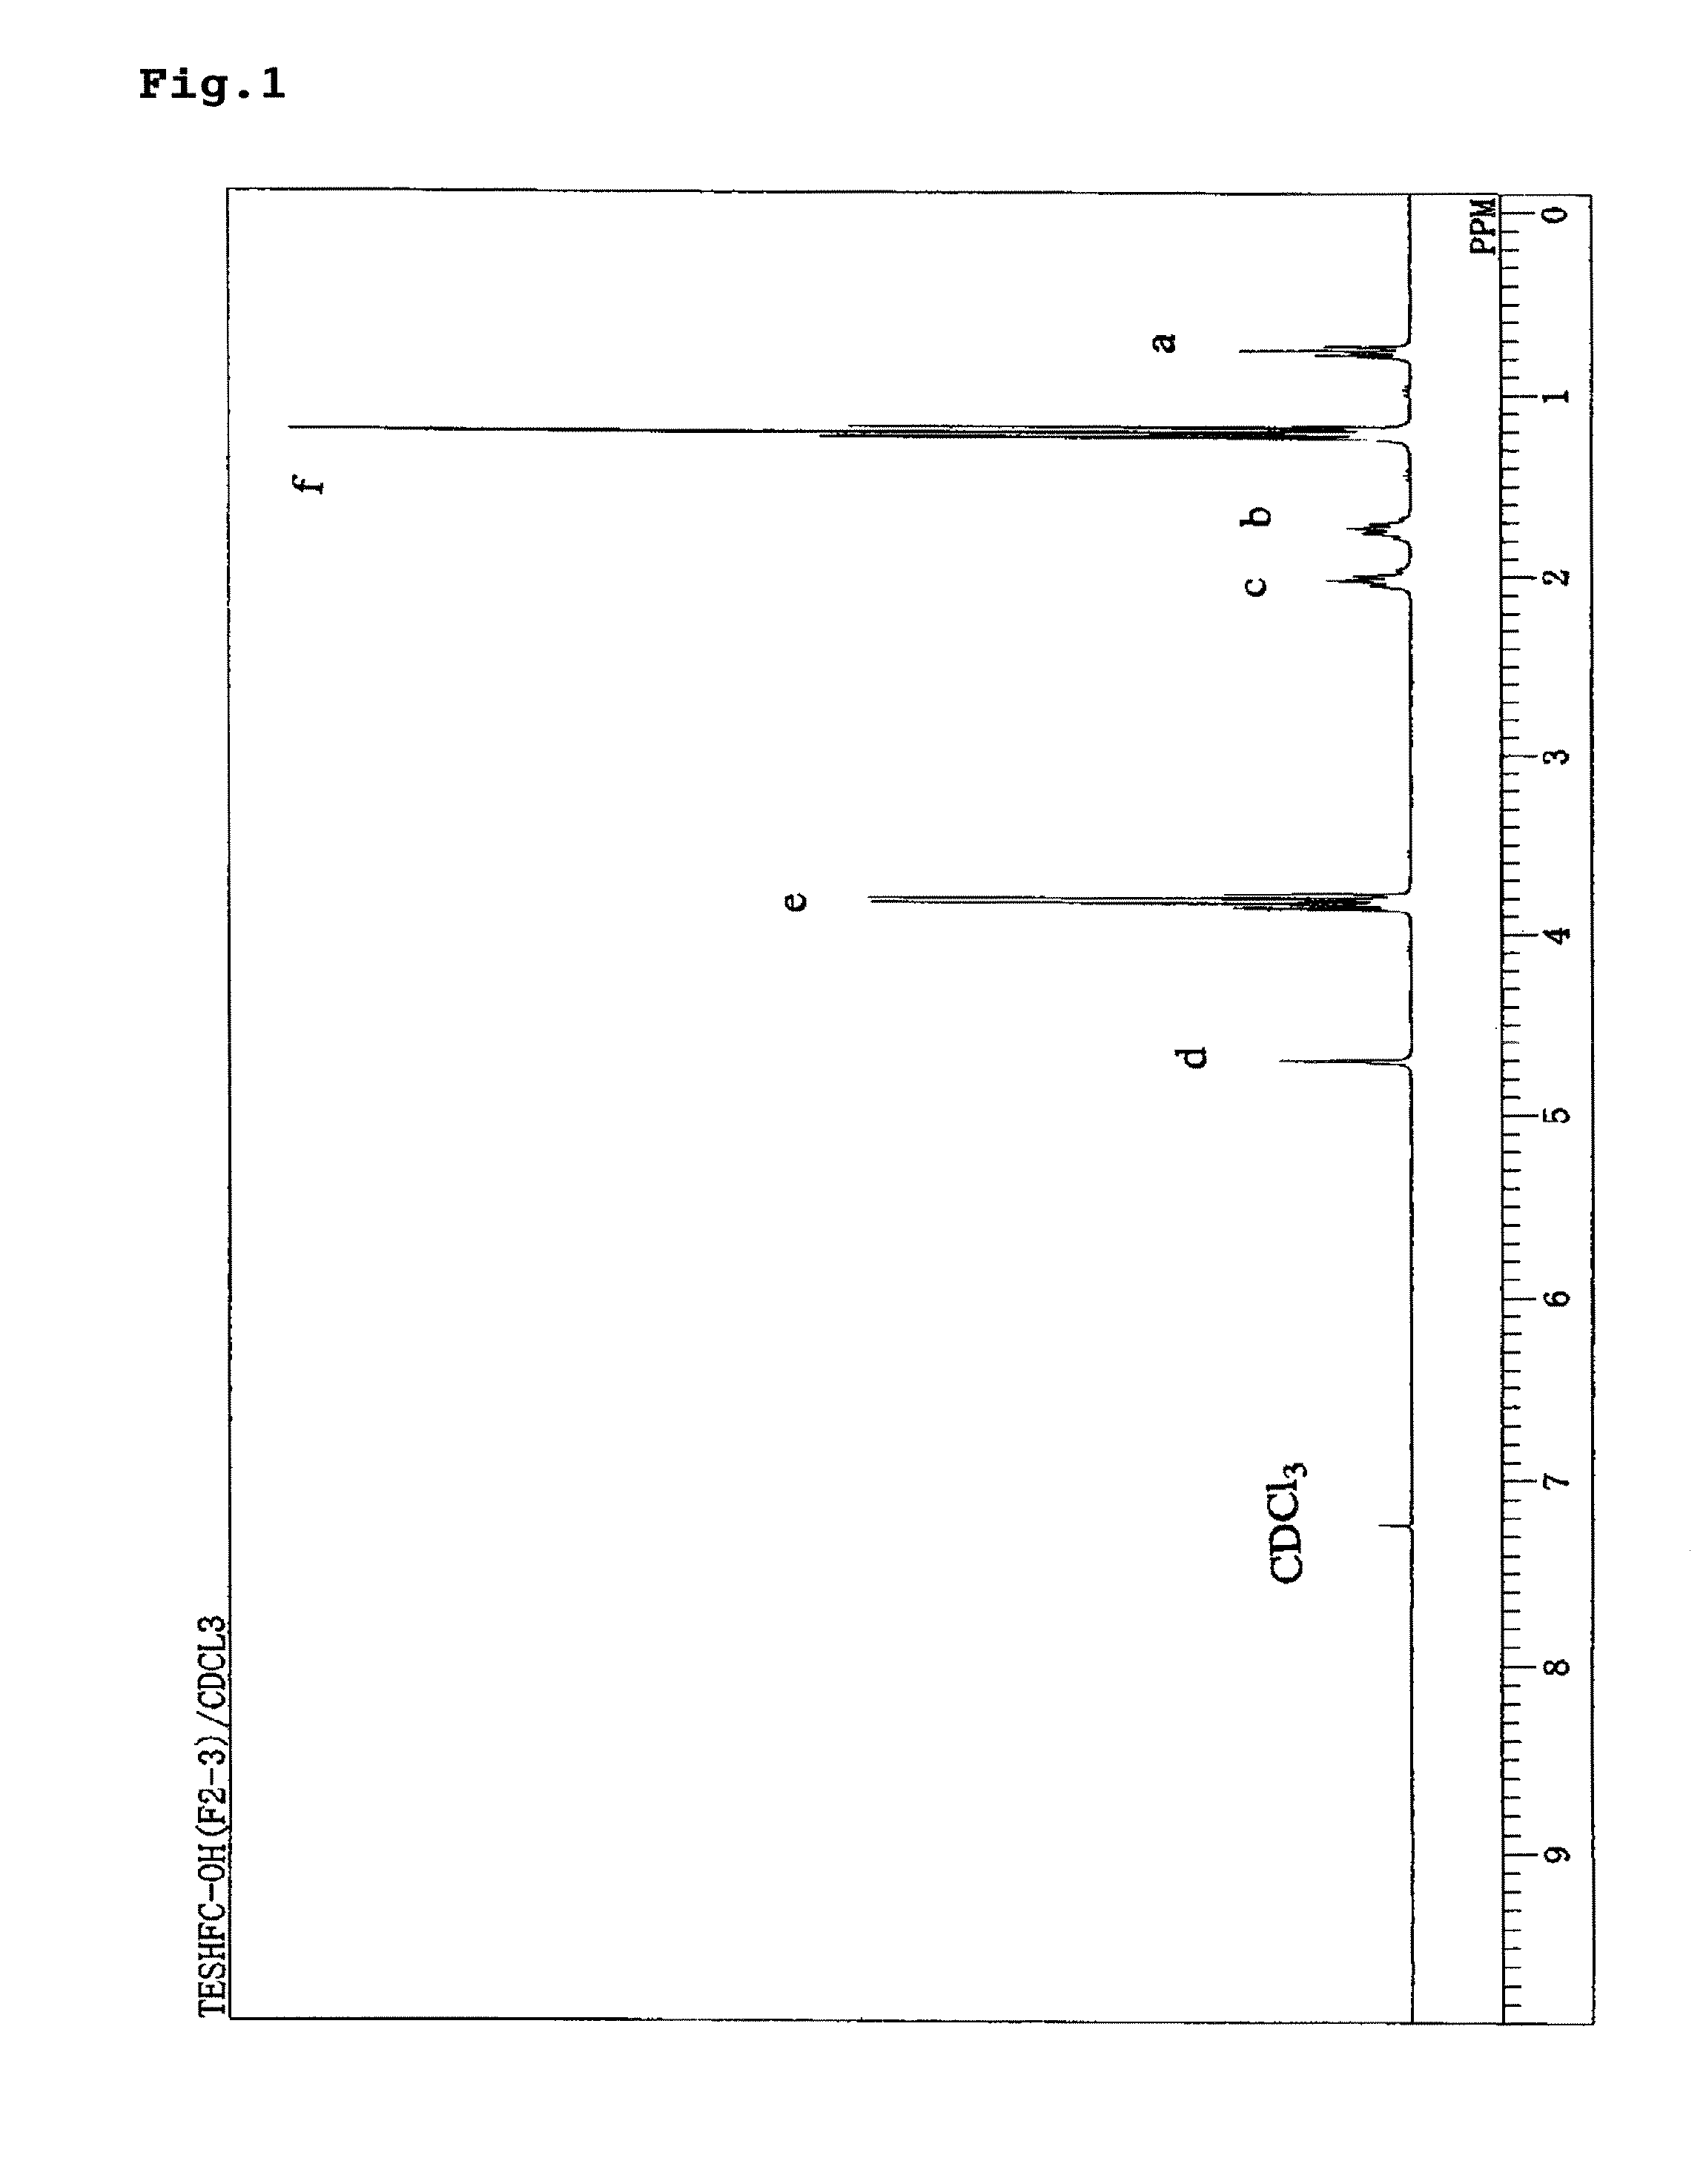 Process for producing organosilicon compound